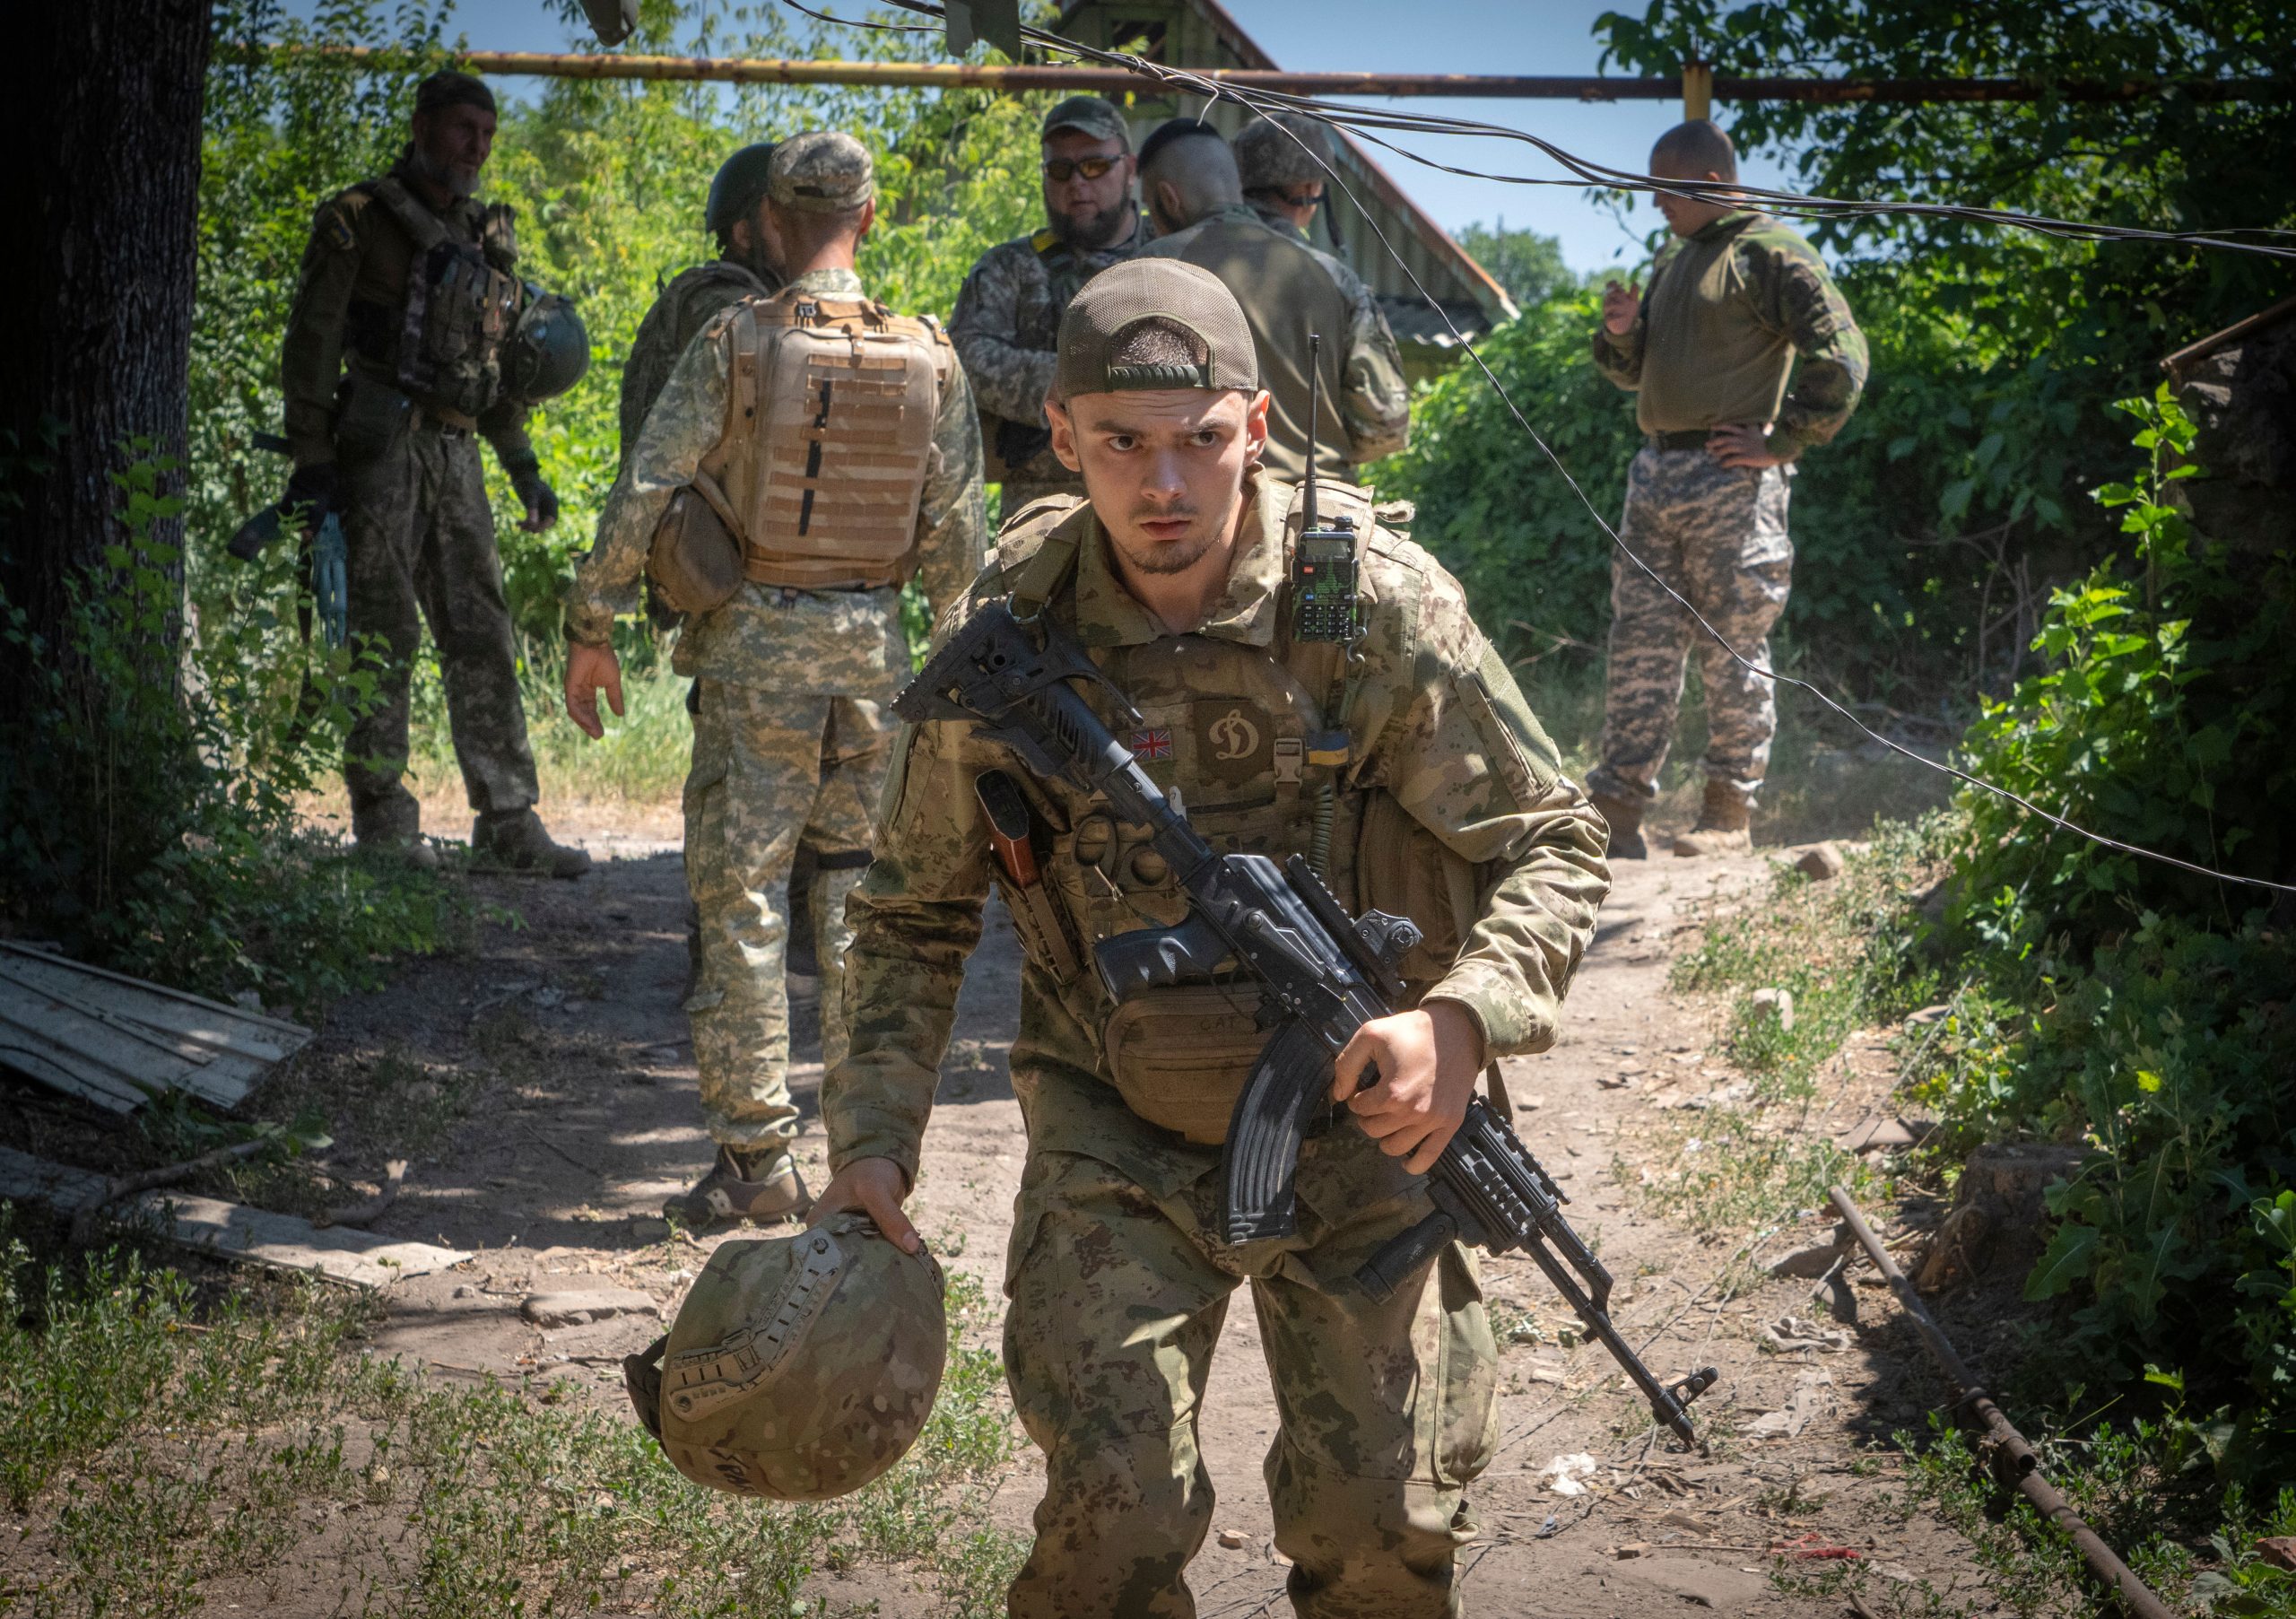 Izyum has fallen: Ukraine pushes Russia into retreat in counteroffensive